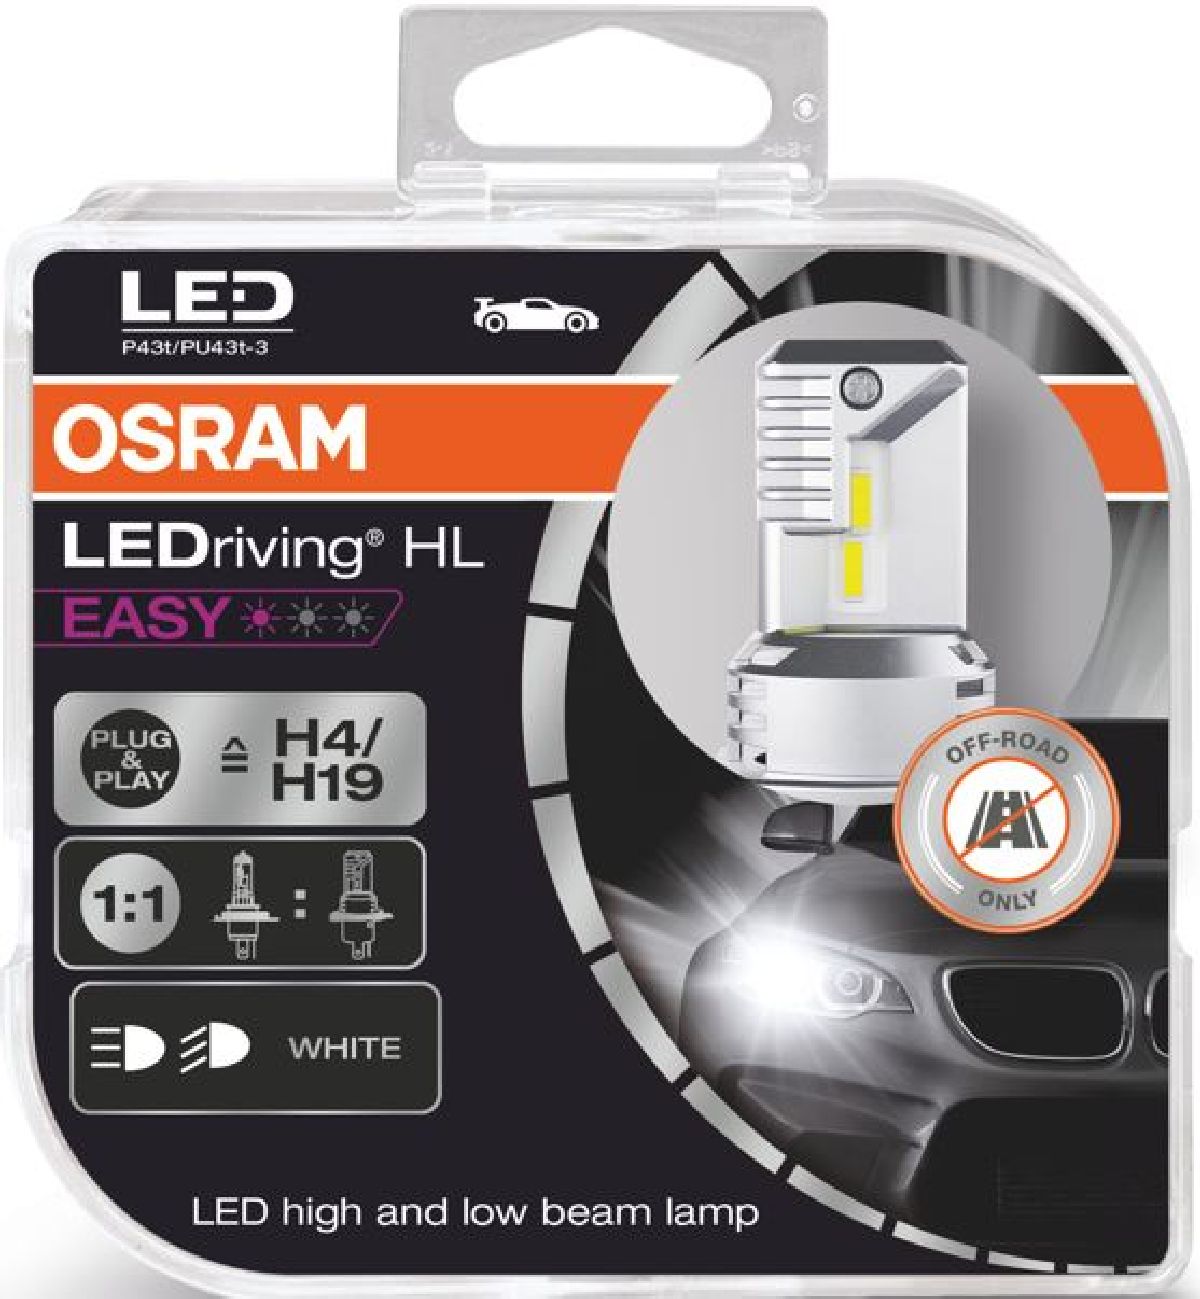 P21W OSRAM LEDriving SL 7506DYP-02B Glühlampe 12V 1,3W, LED